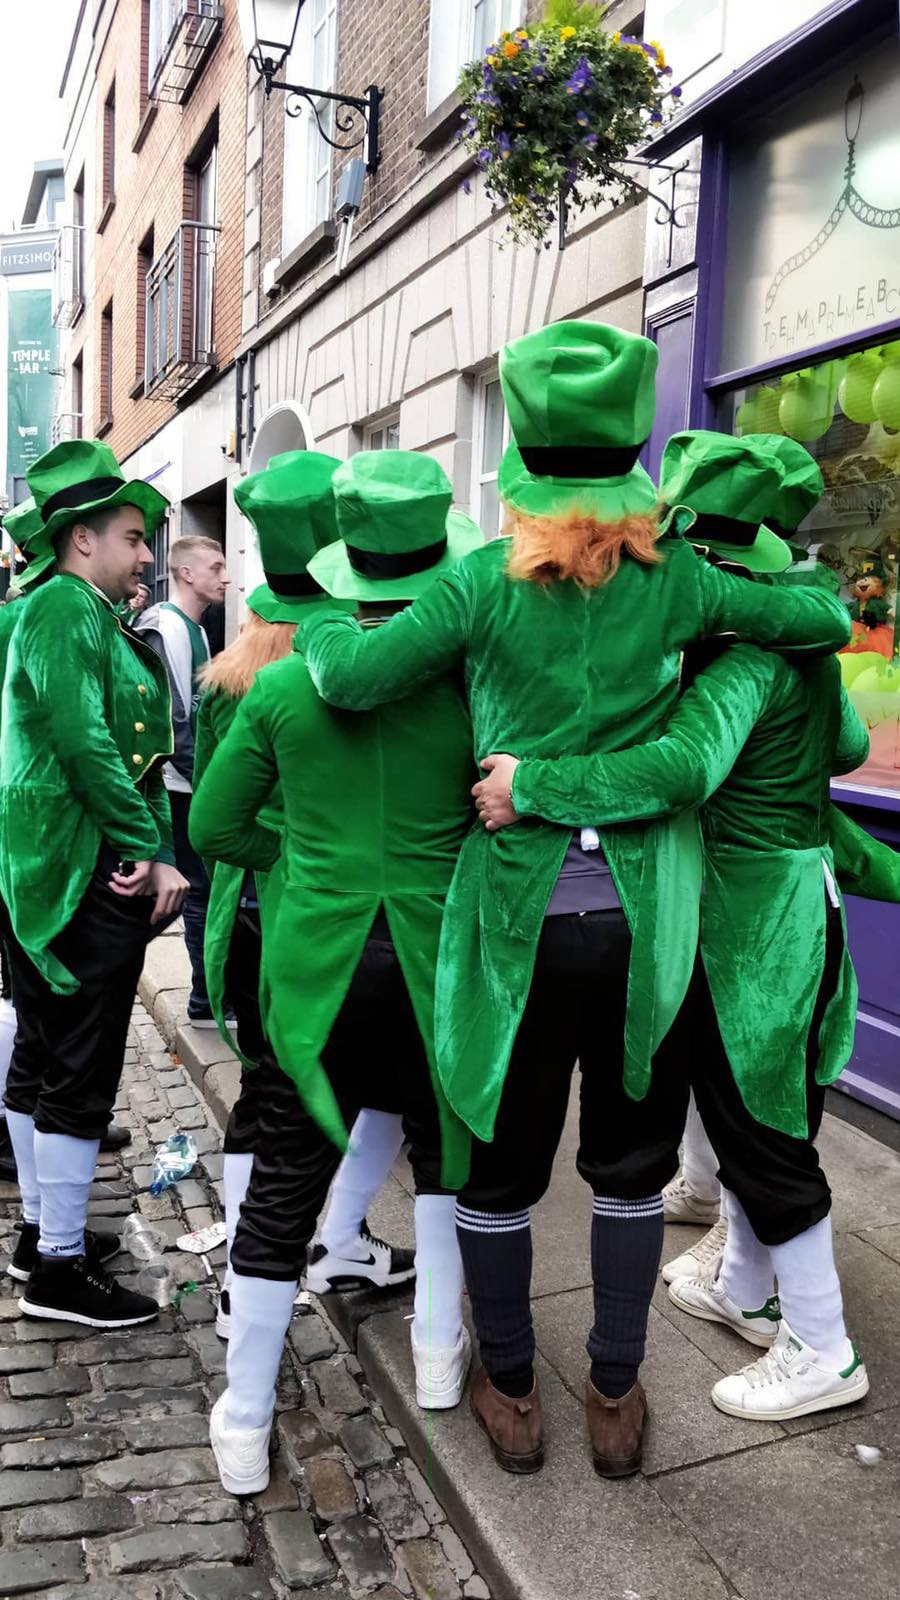 St Patricks Day in Dublin, Ireland